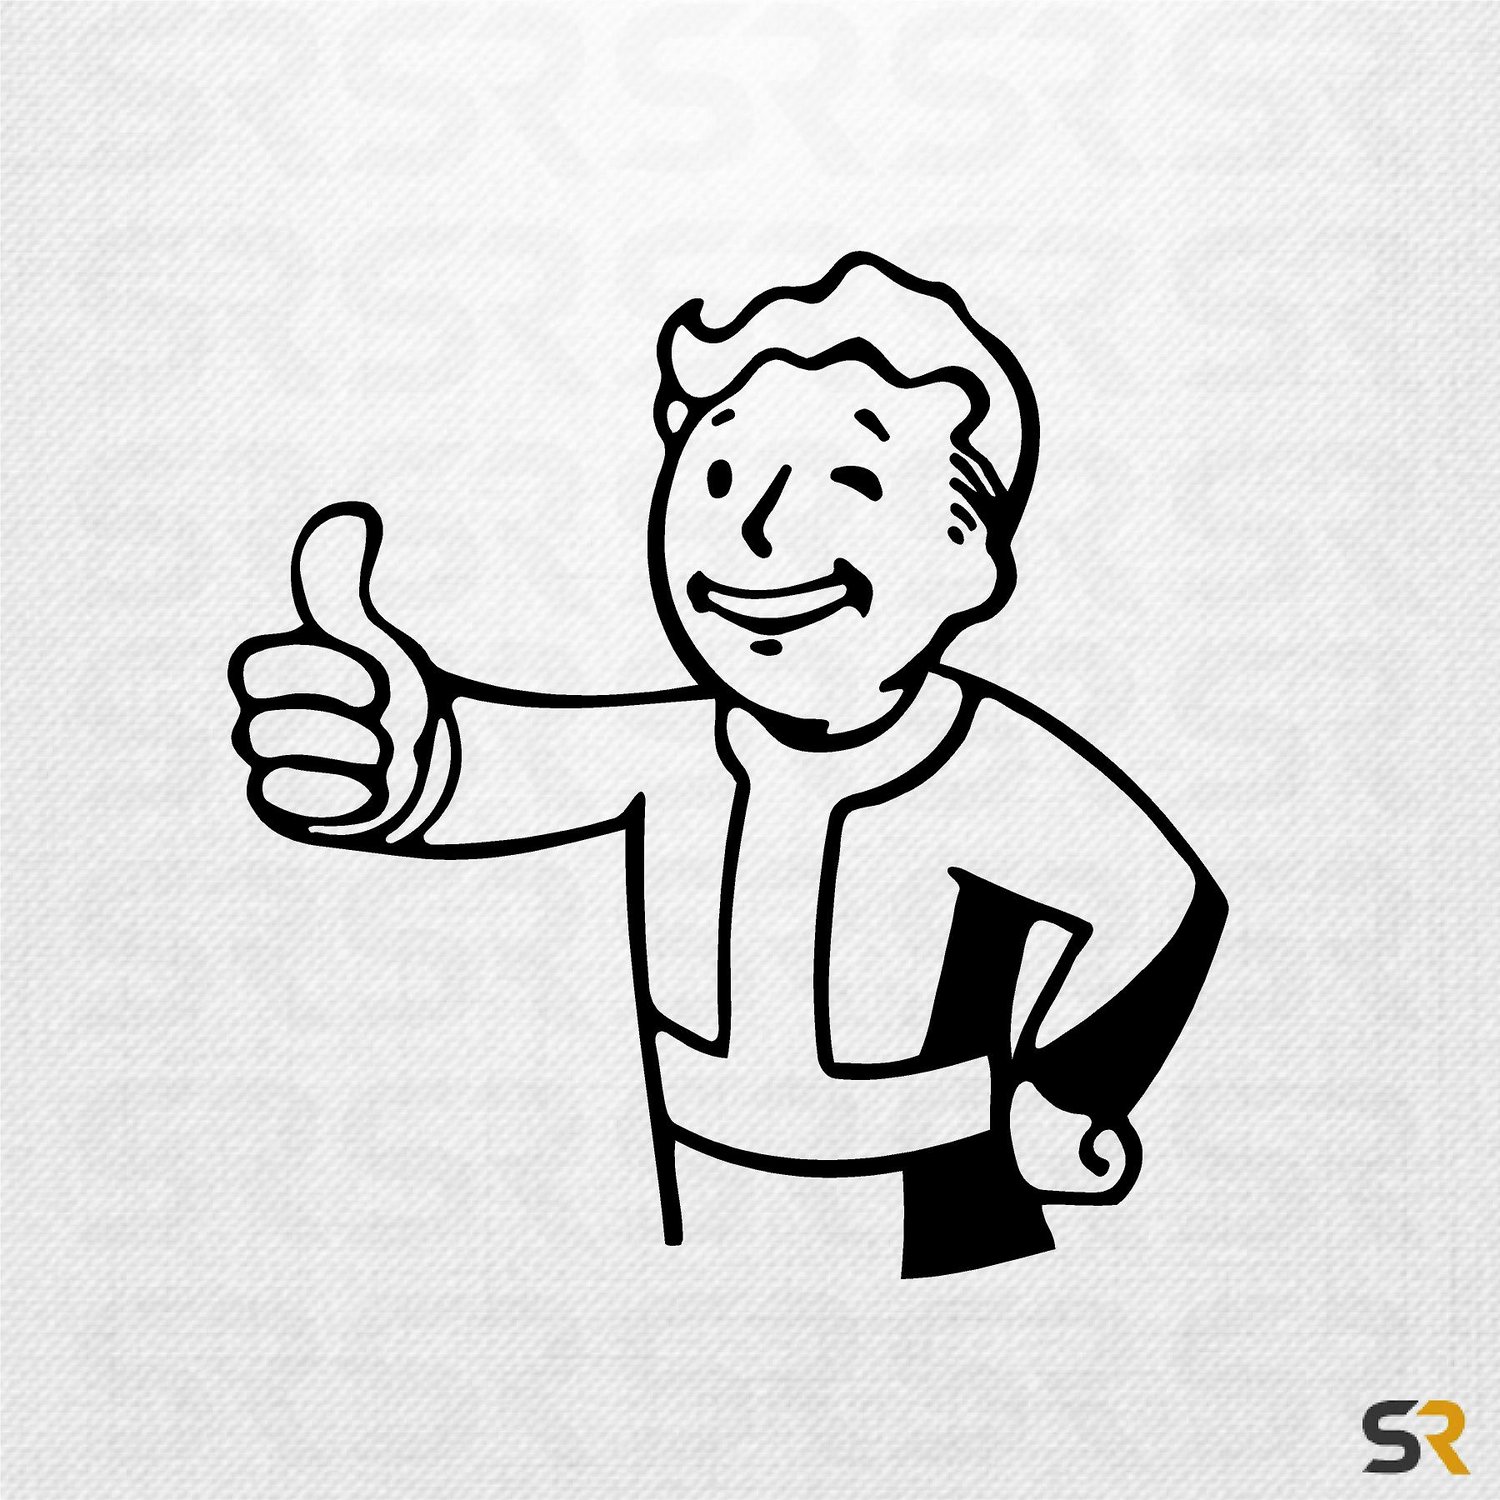 Image of Vault Boy Decal, Fallout 4 Decal, Vault Boy Sticker, Fallout Decals, Fallout Game Stickers, Pip Boy